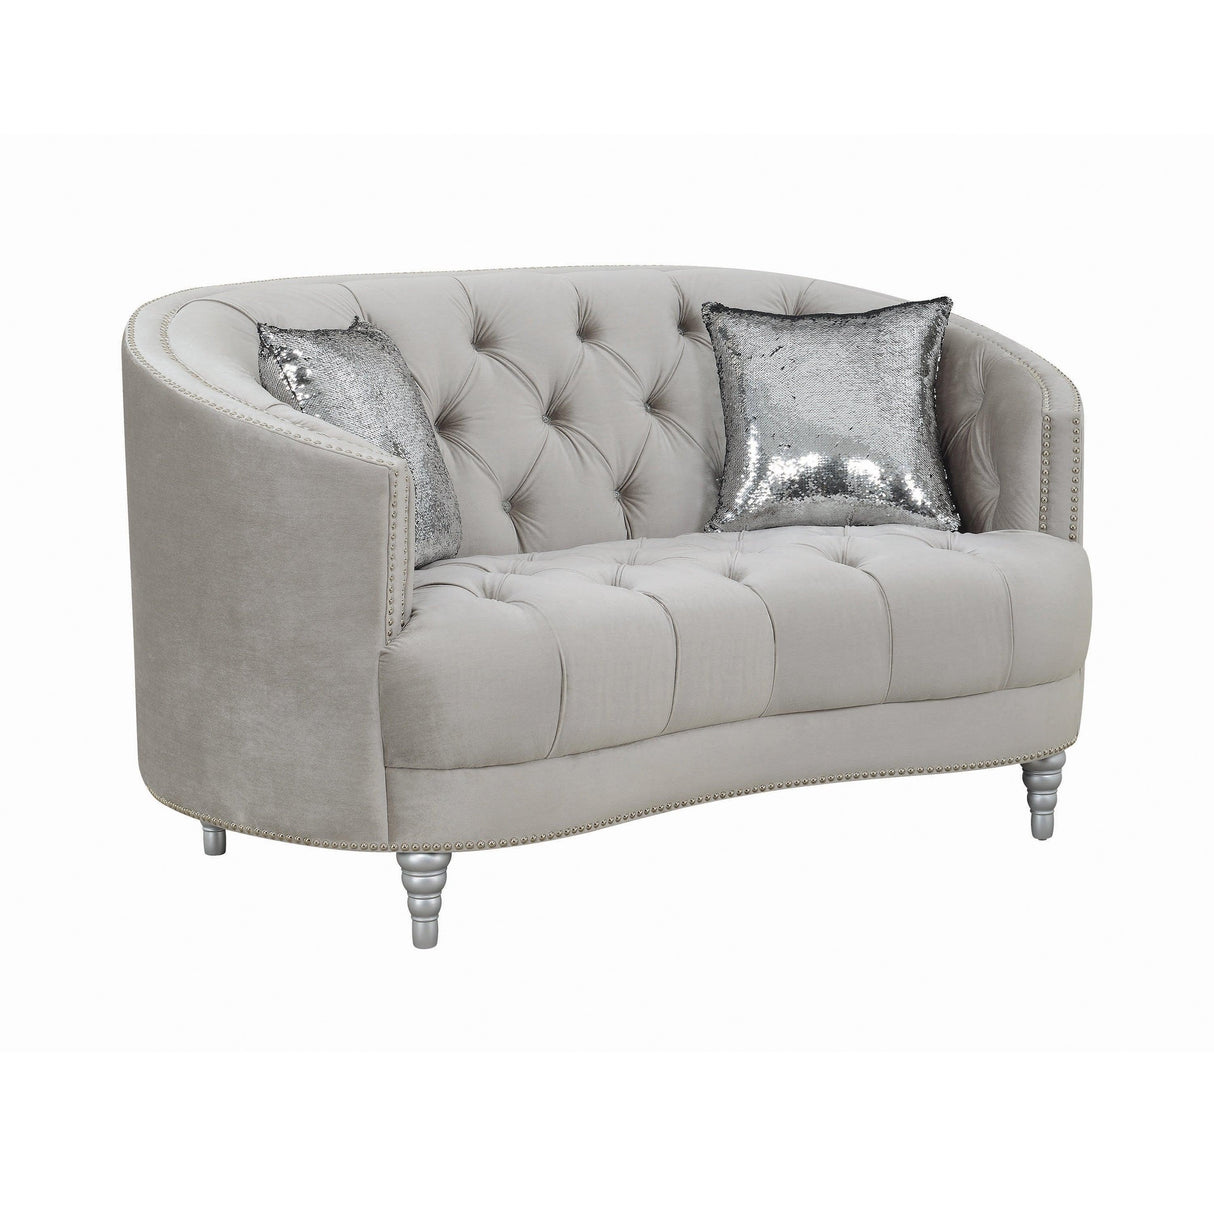 Avonlea Sofa and Loveseat Grey by Coaster Furniture Coaster Furniture